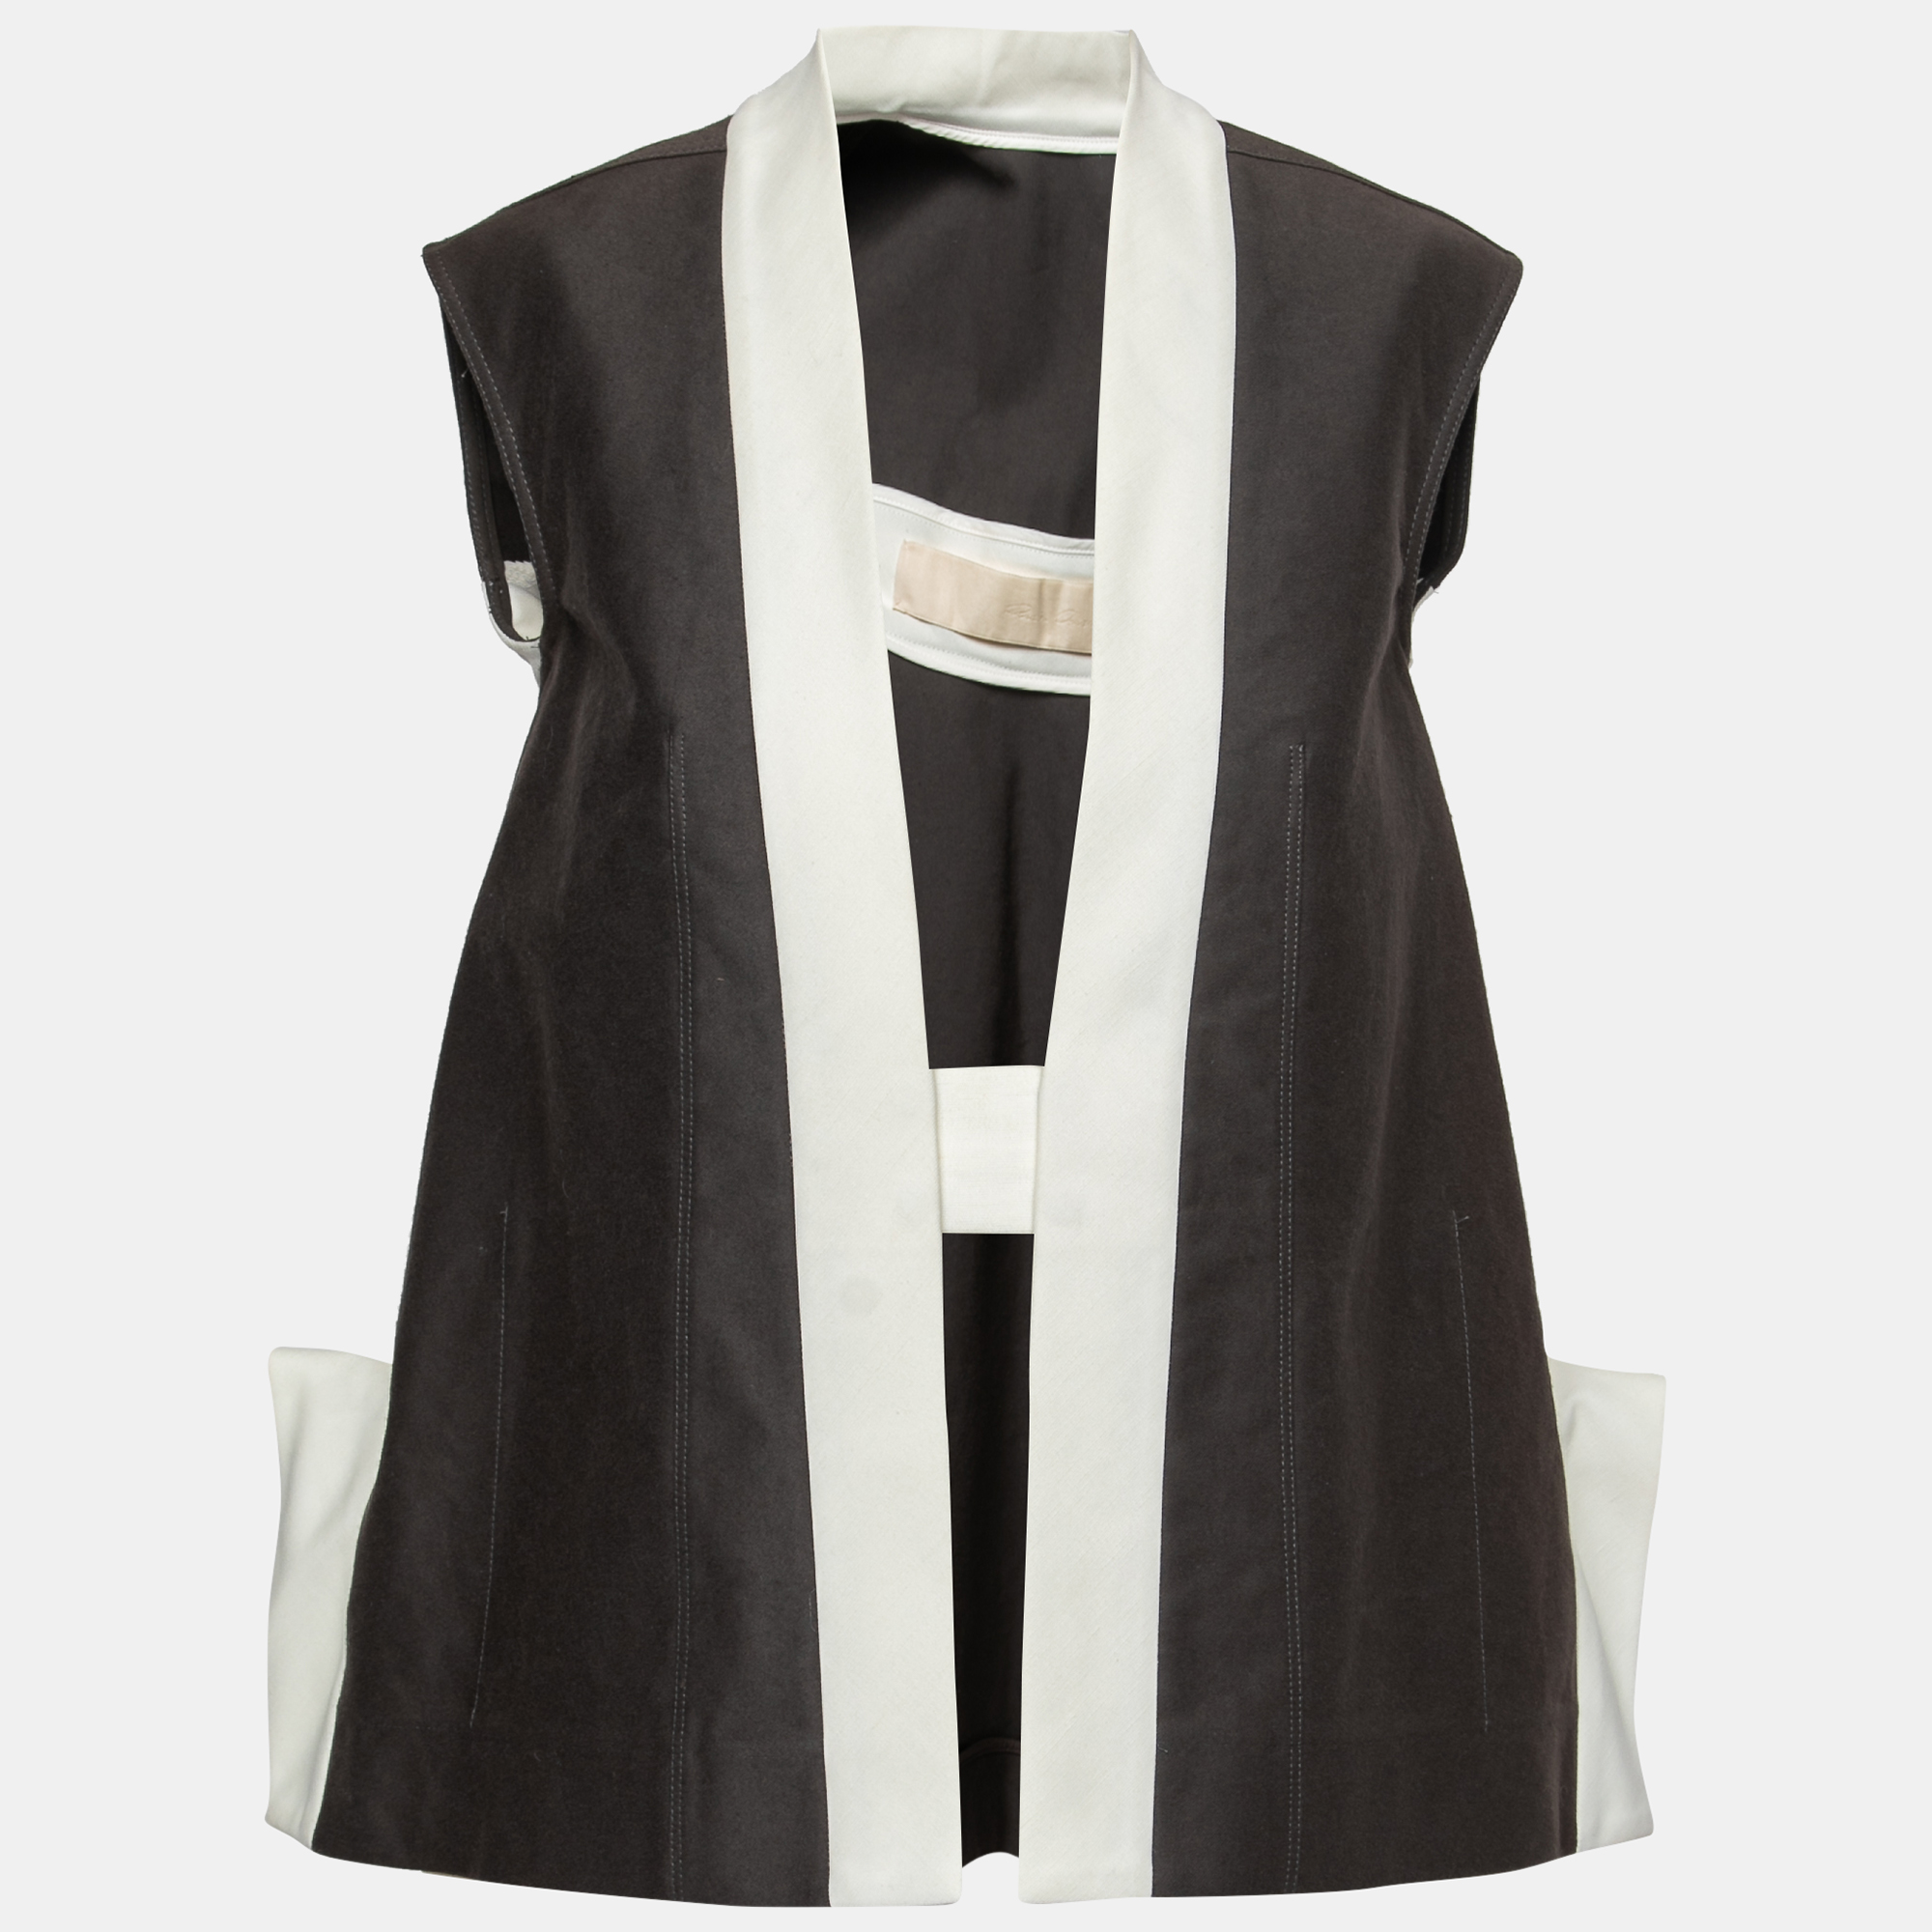 Darkdust Brown Cotton Asymmetric Hem Contrast Trim Sleeveless Jacket